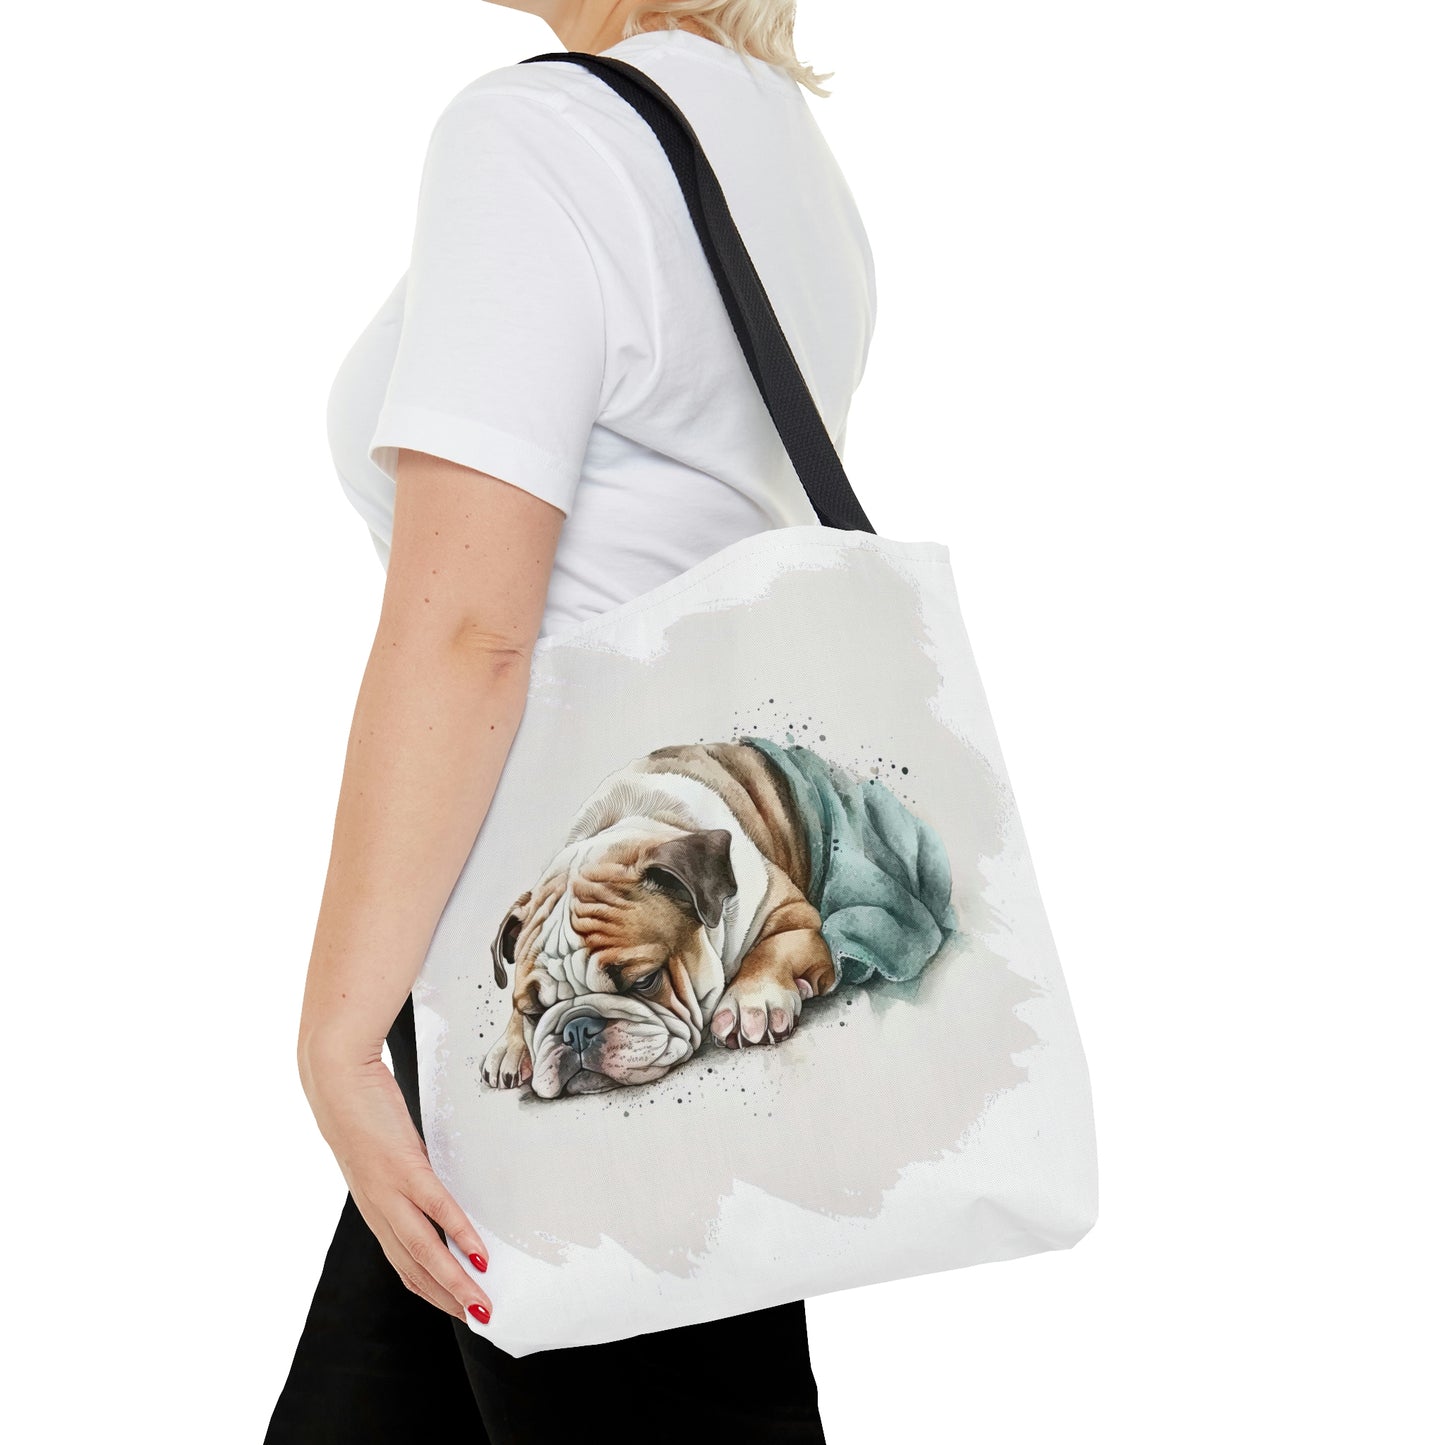 English Bulldog (Sleeping) Tote Bag